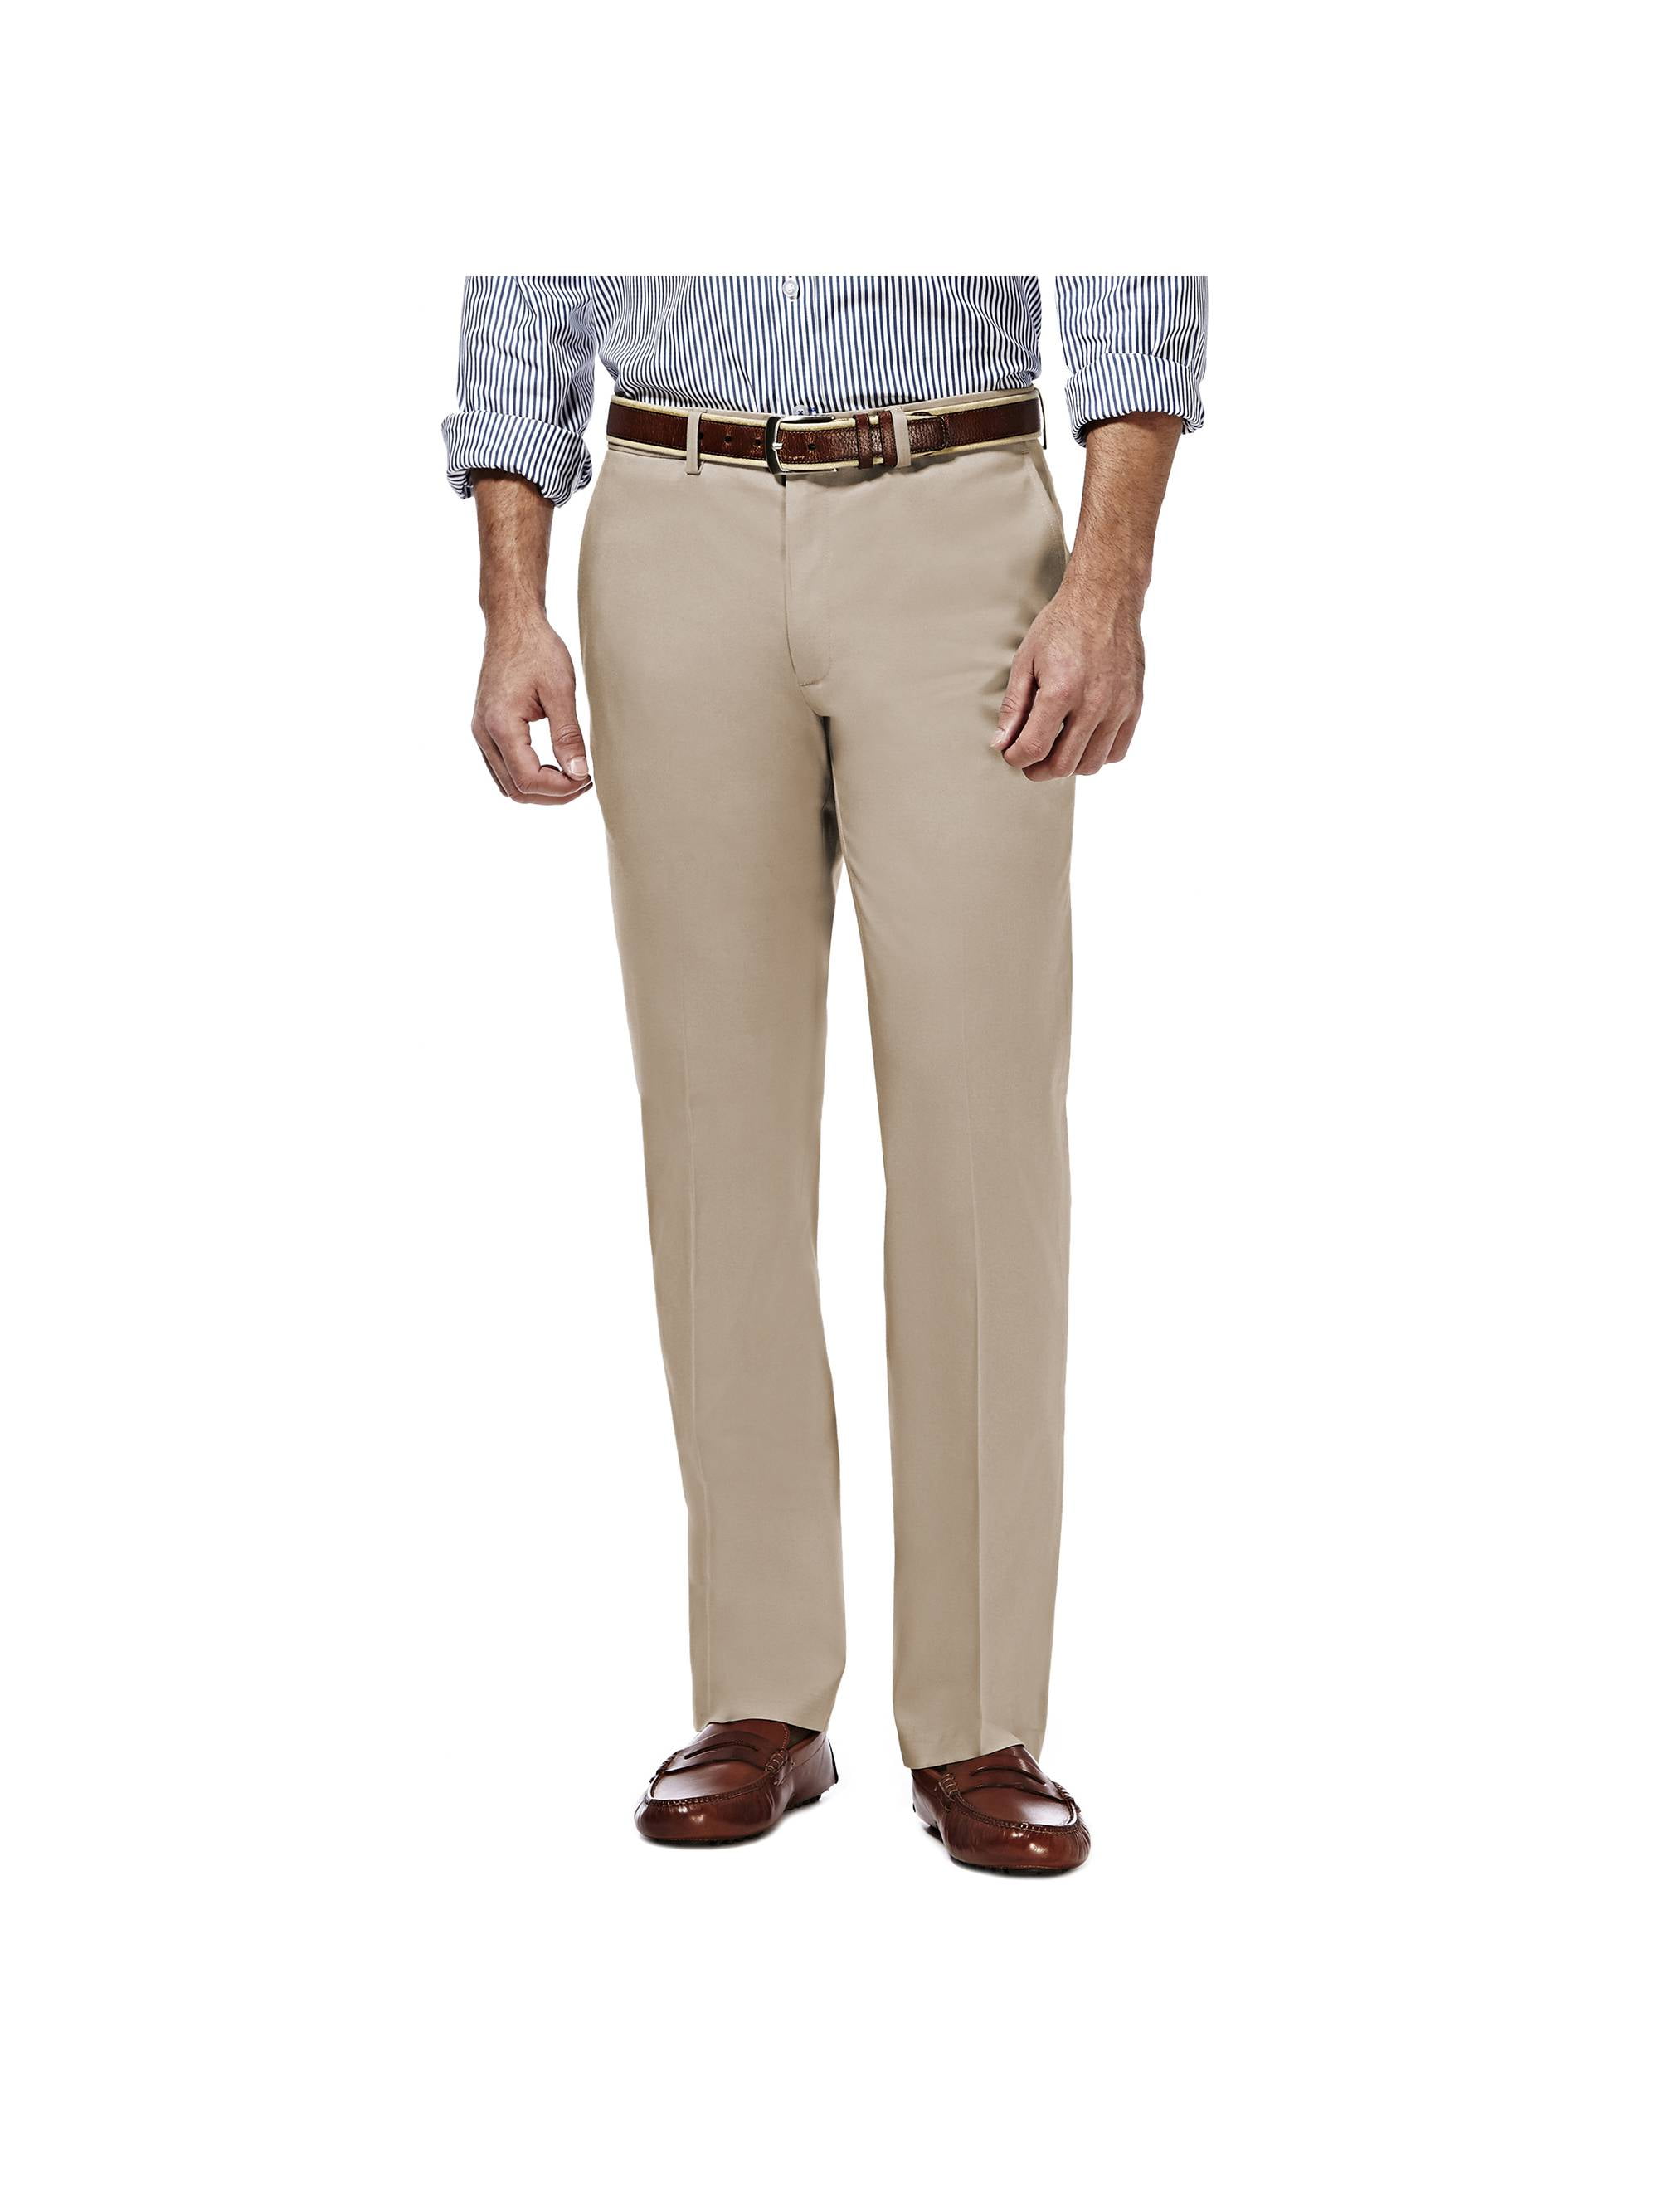 Haggar Men's Premium No Iron Khaki Straight Fit Flex Waistband Flat Front Pant